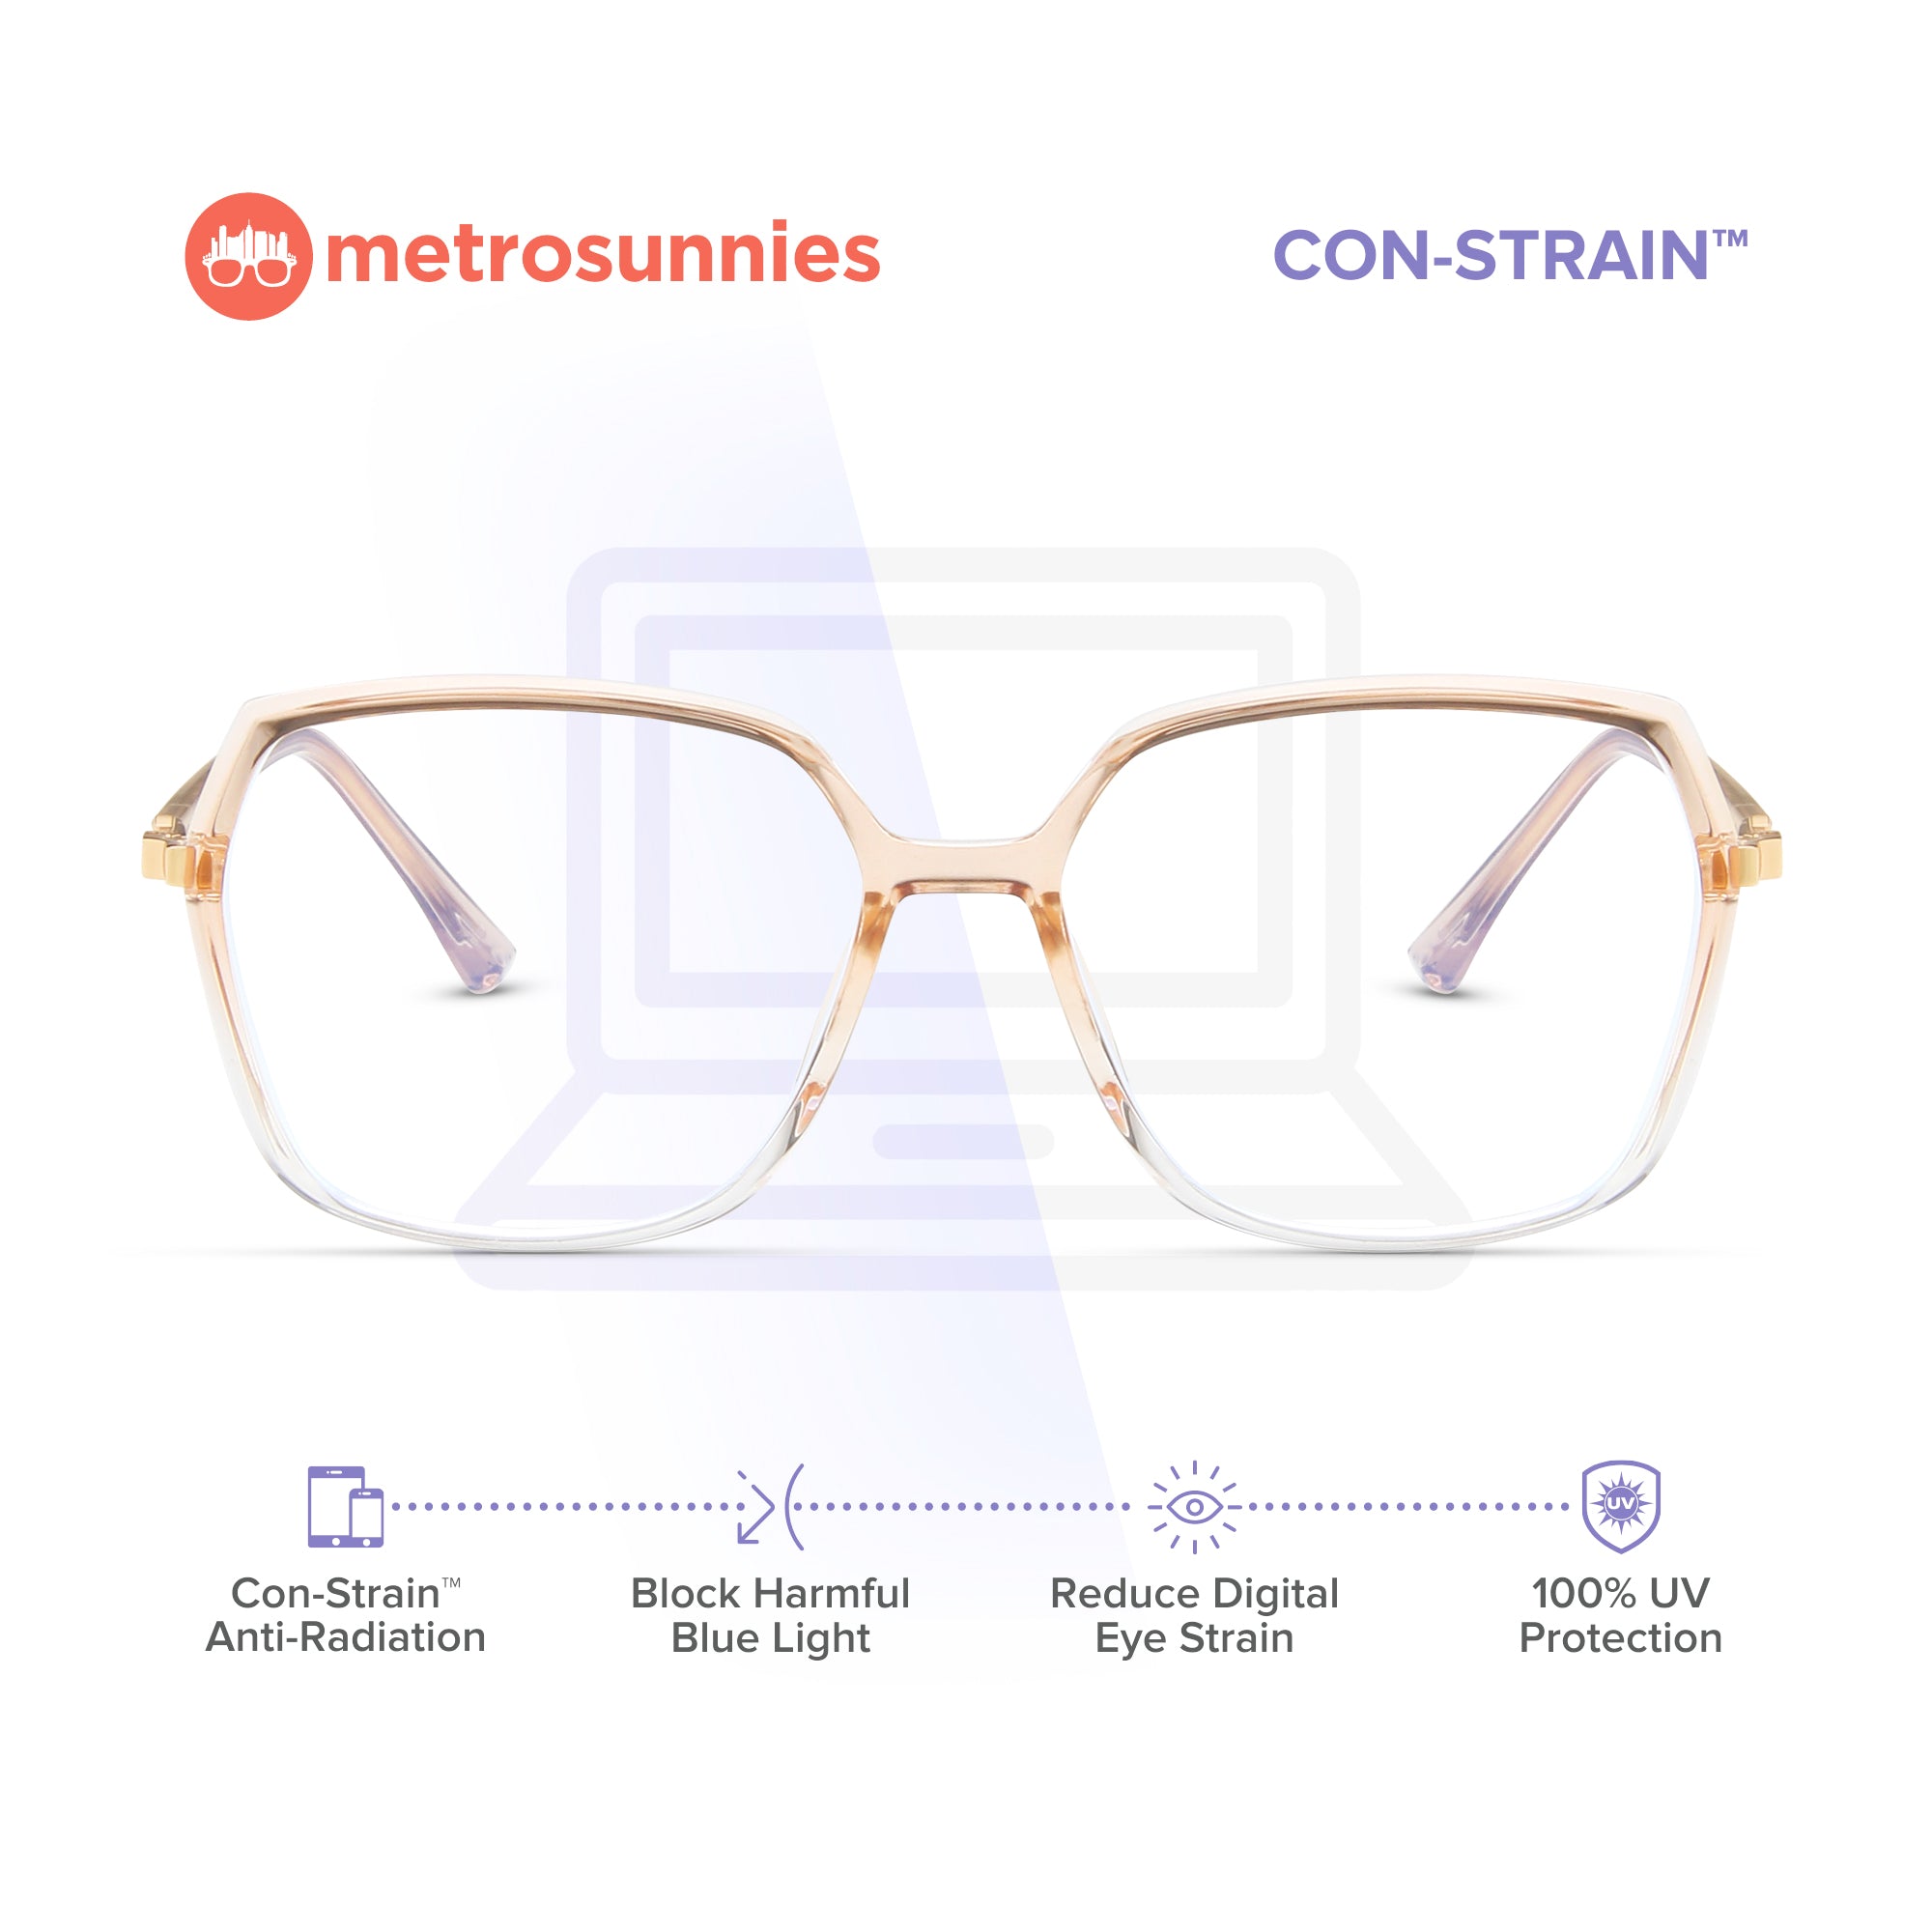 MetroSunnies Winnie Specs (Champagne) / Con-Strain Blue Light / Versairy / Anti-Radiation Eyeglasses